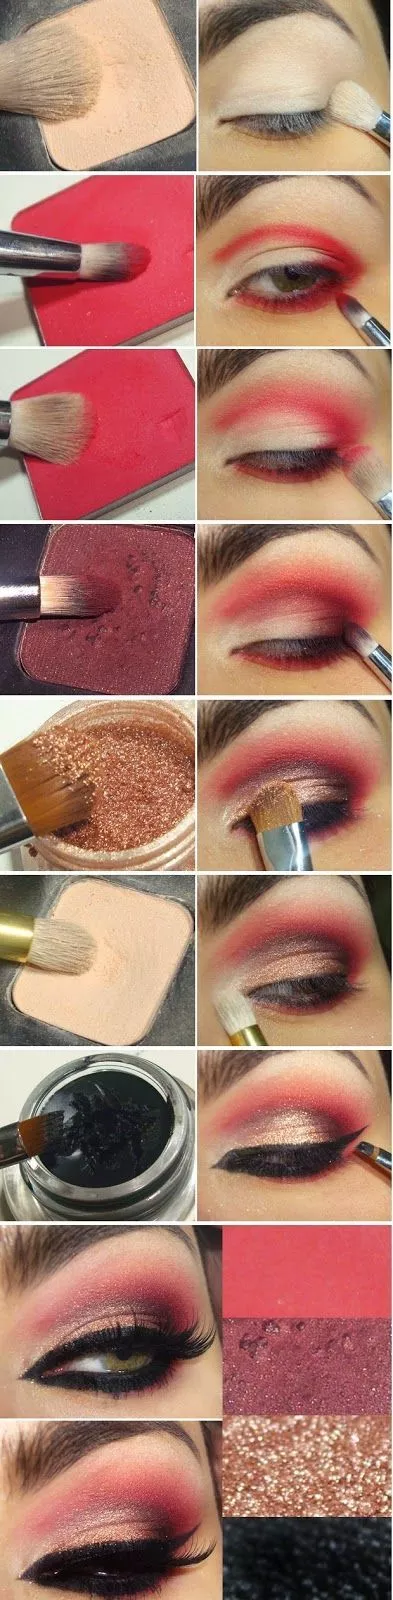 red-and-black-makeup-tutorial-04_10-3 Rode en zwarte make-up tutorial